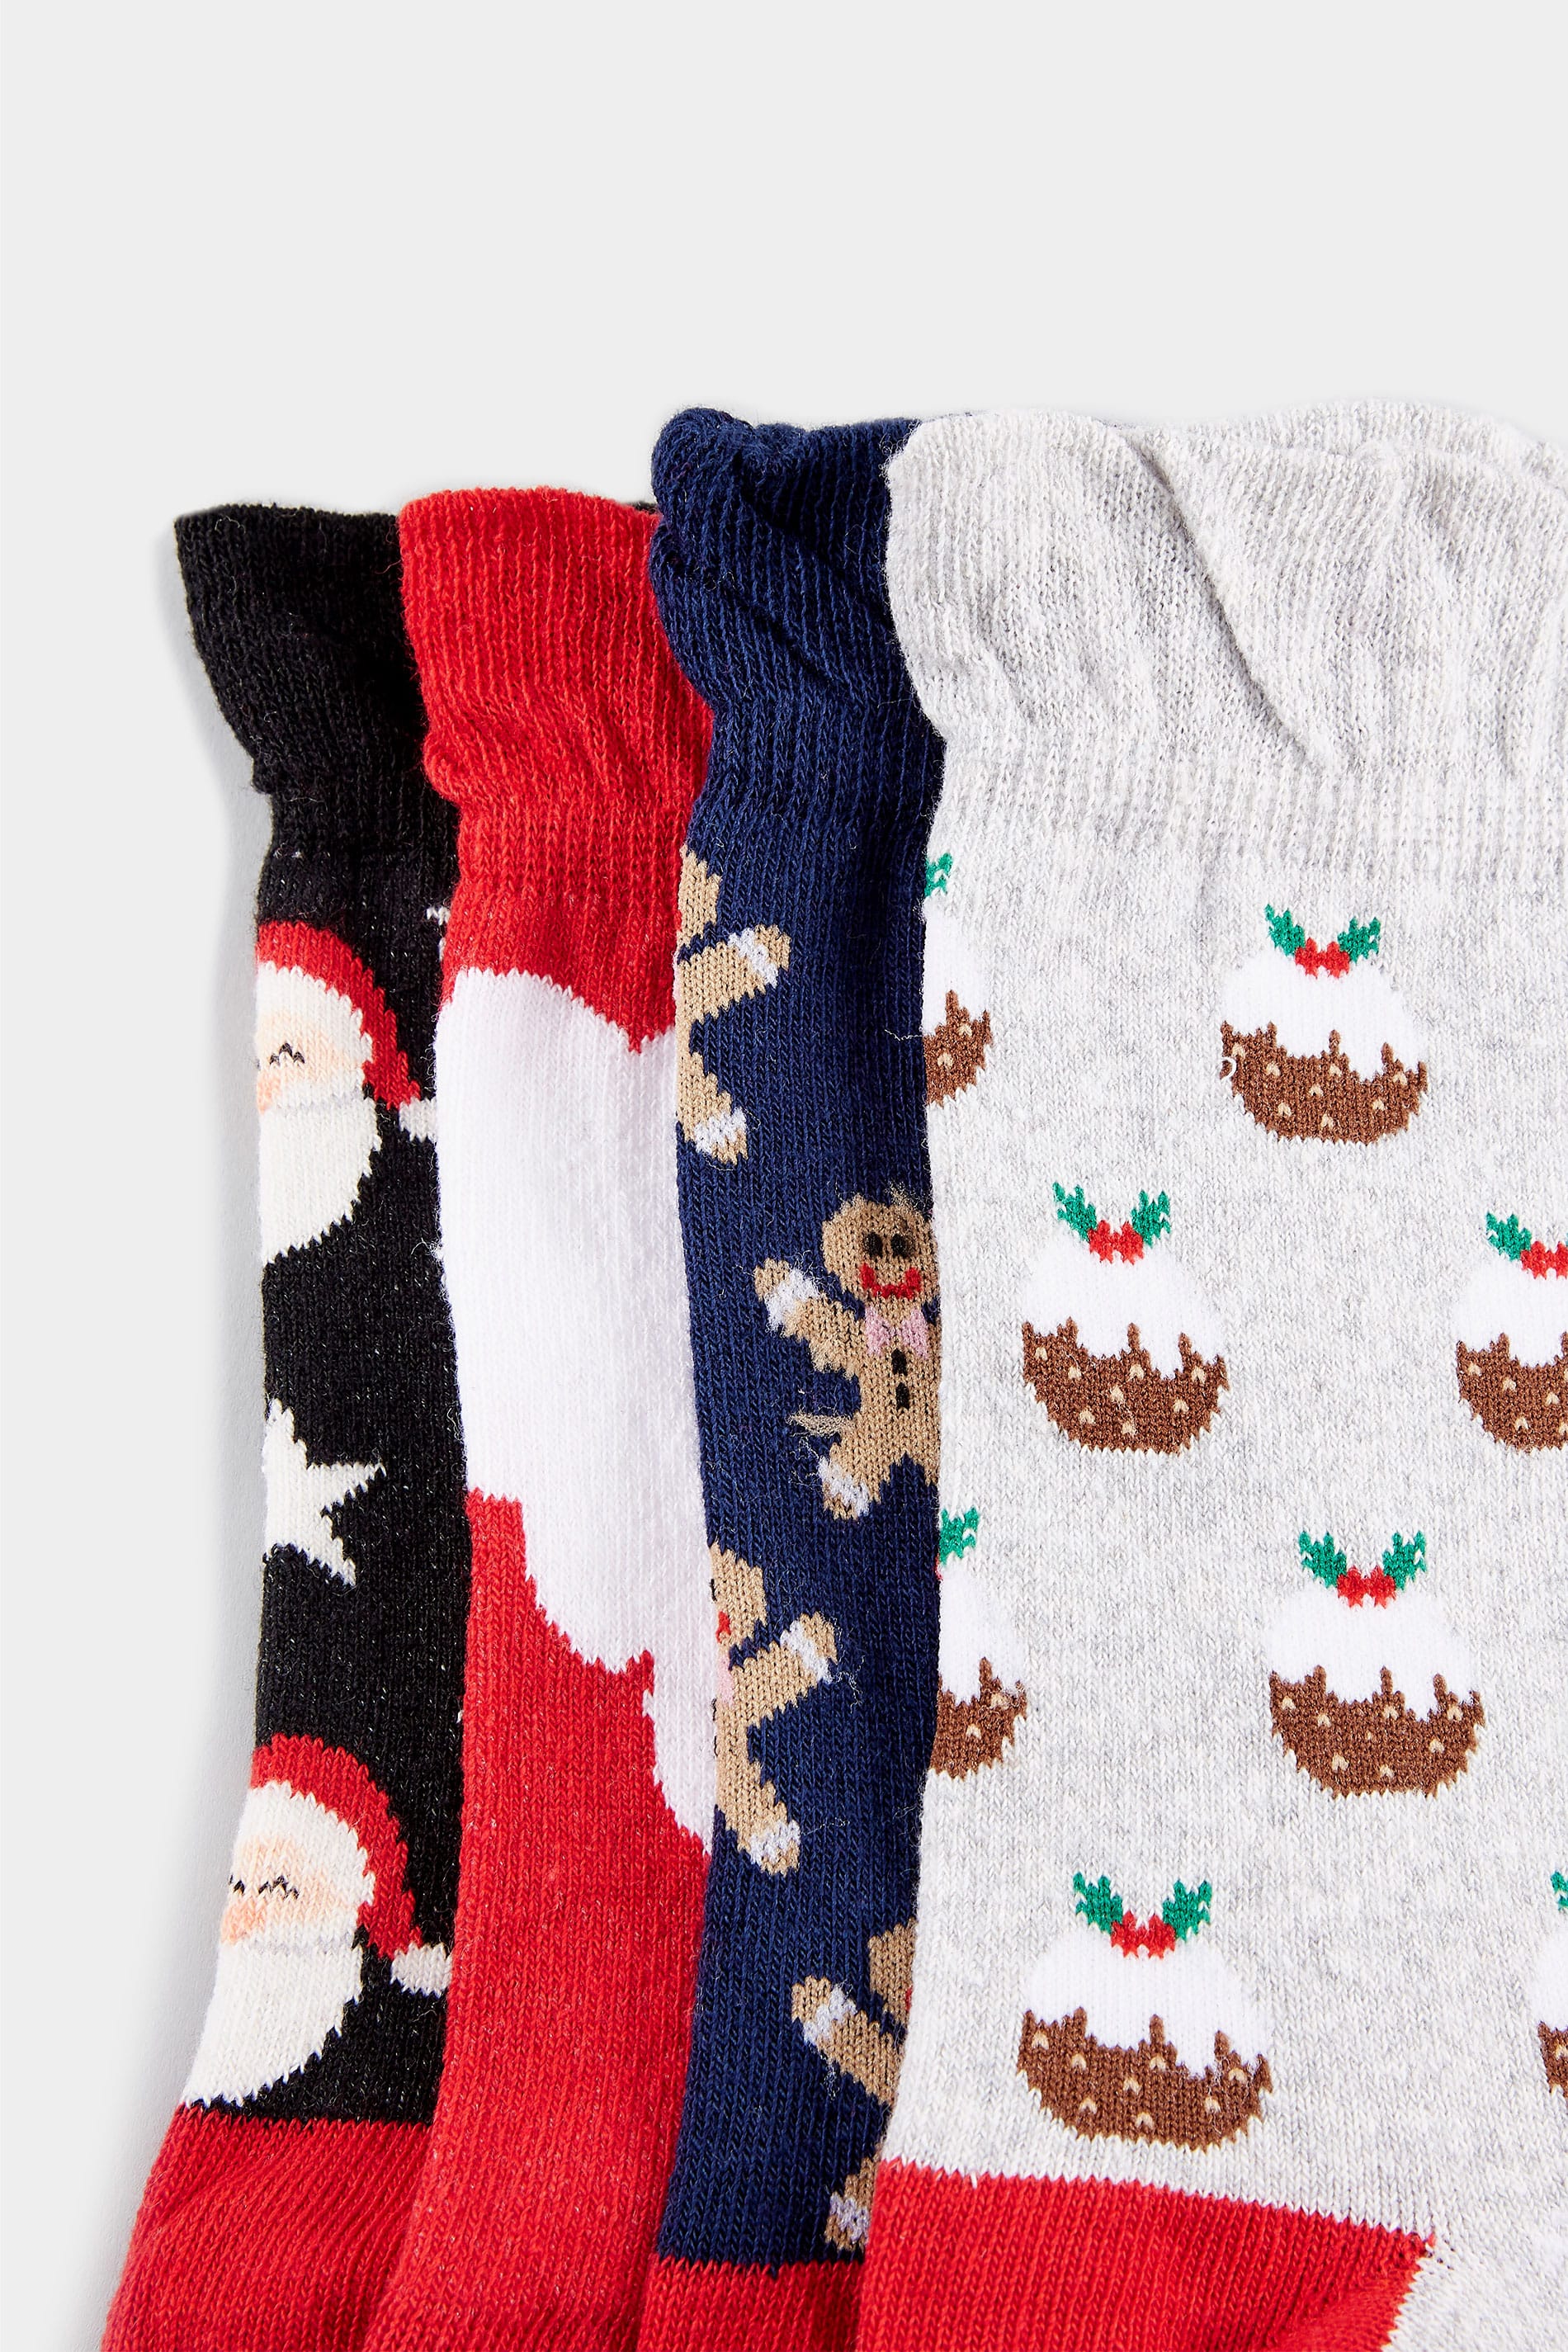 4 PACK Multi Assorted Christmas Socks